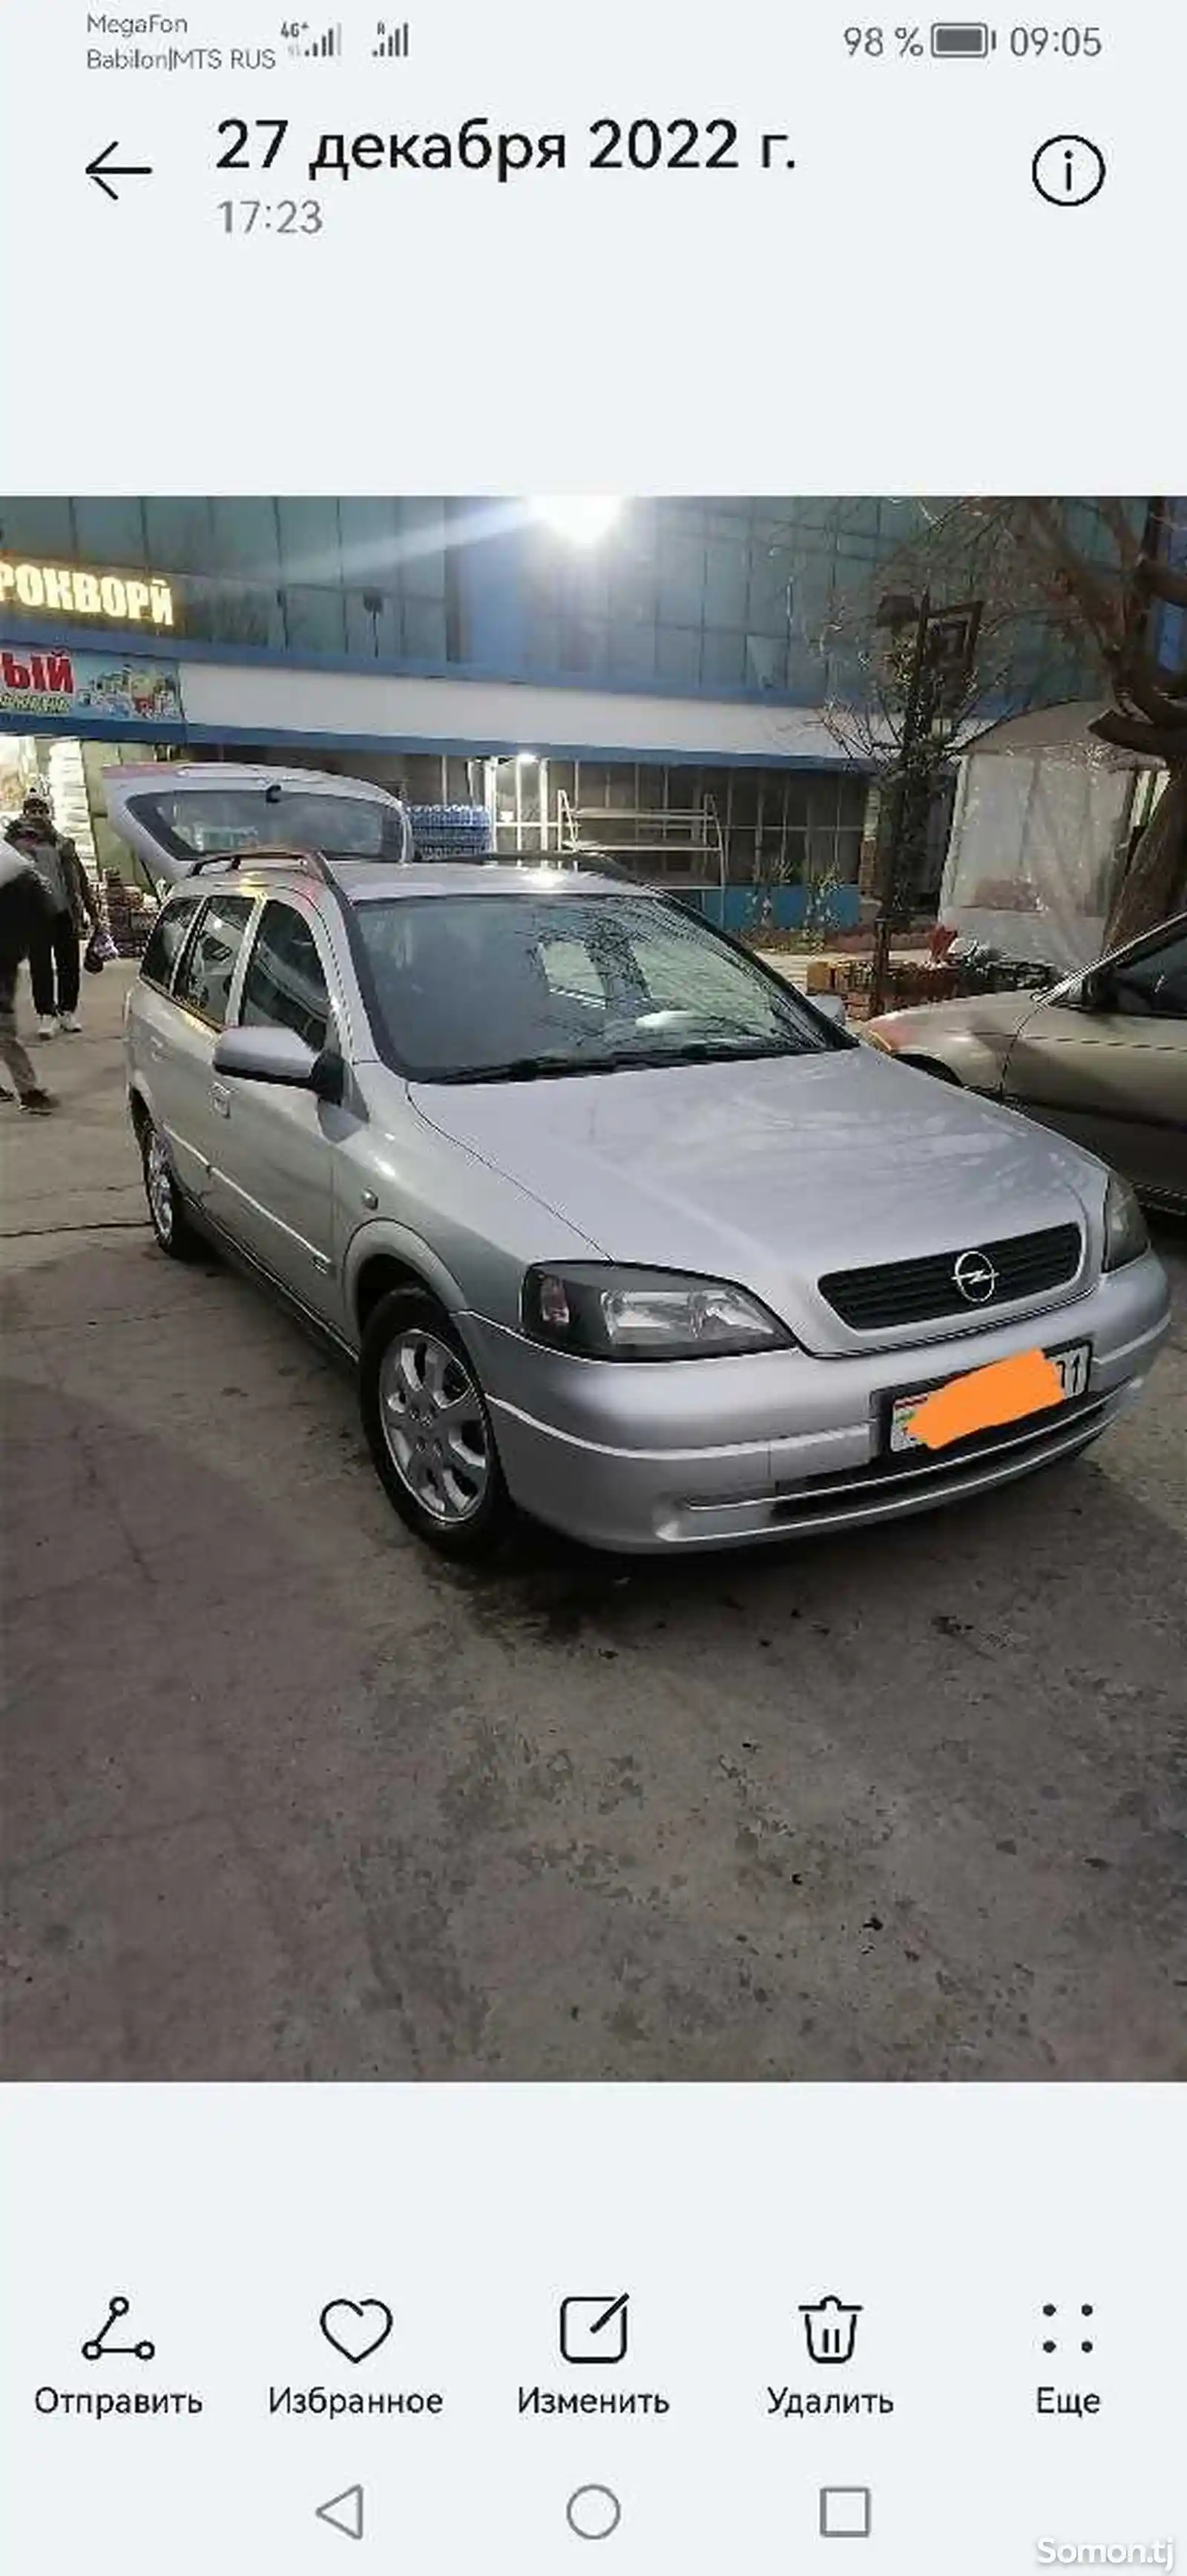 Opel Astra G, 2002-3